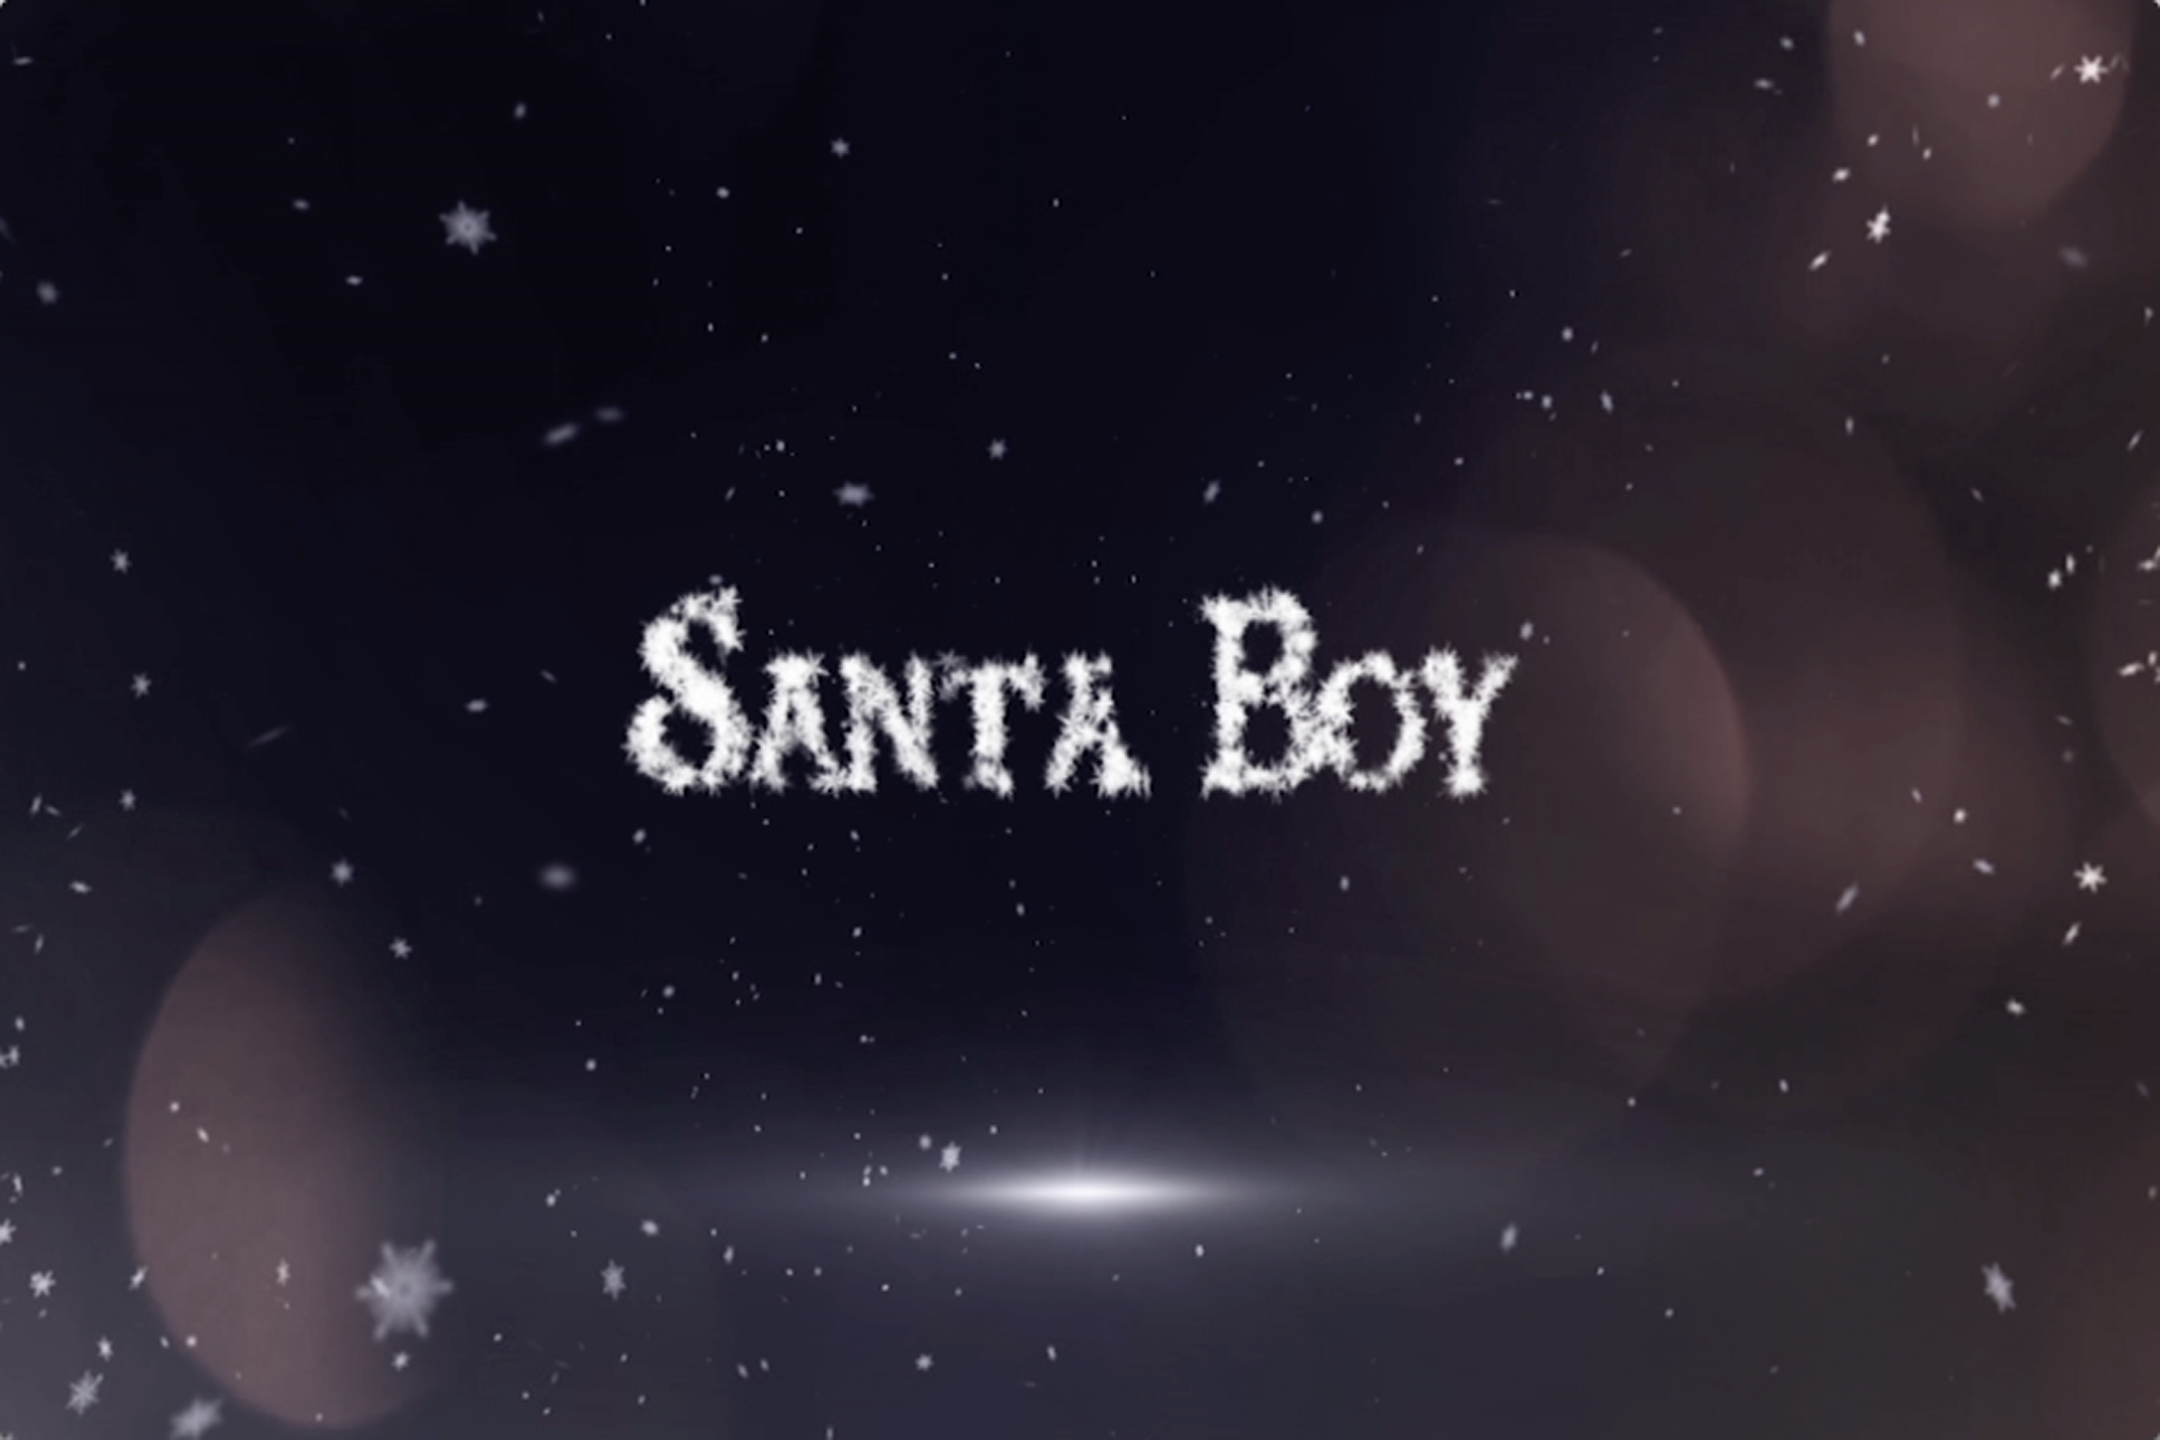 Short Film “Santa Boy” by J Team